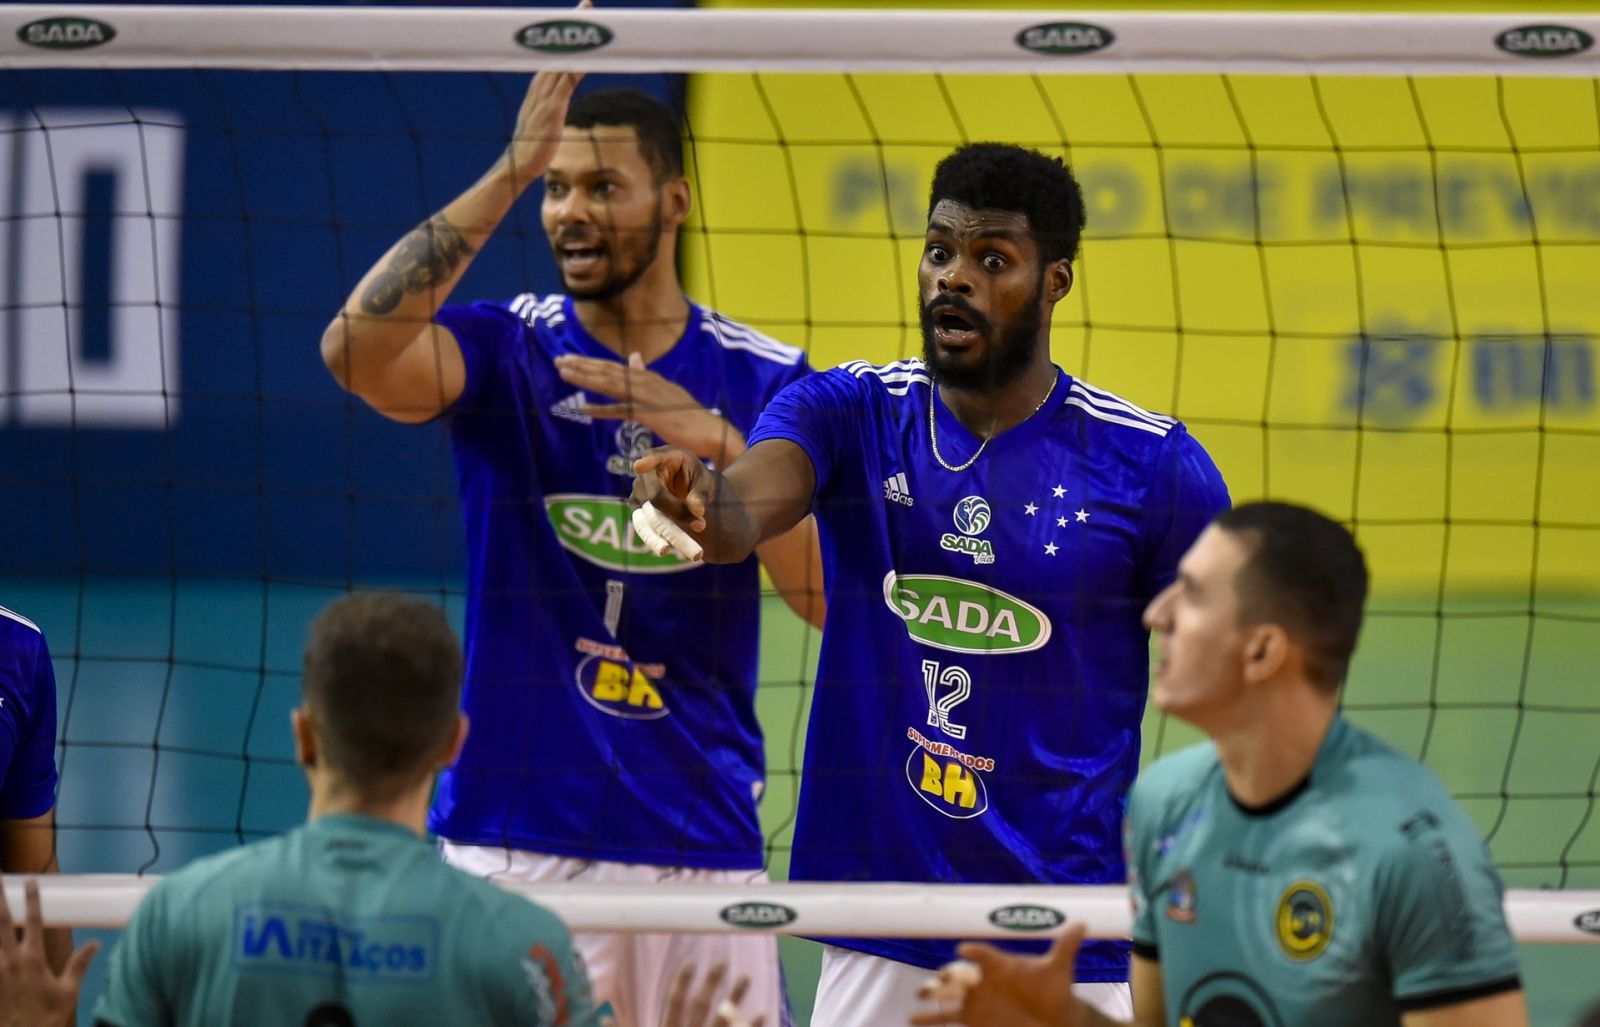 Fora de casa, Sada Cruzeiro vence Uberlândia e dispara no topo da tabela